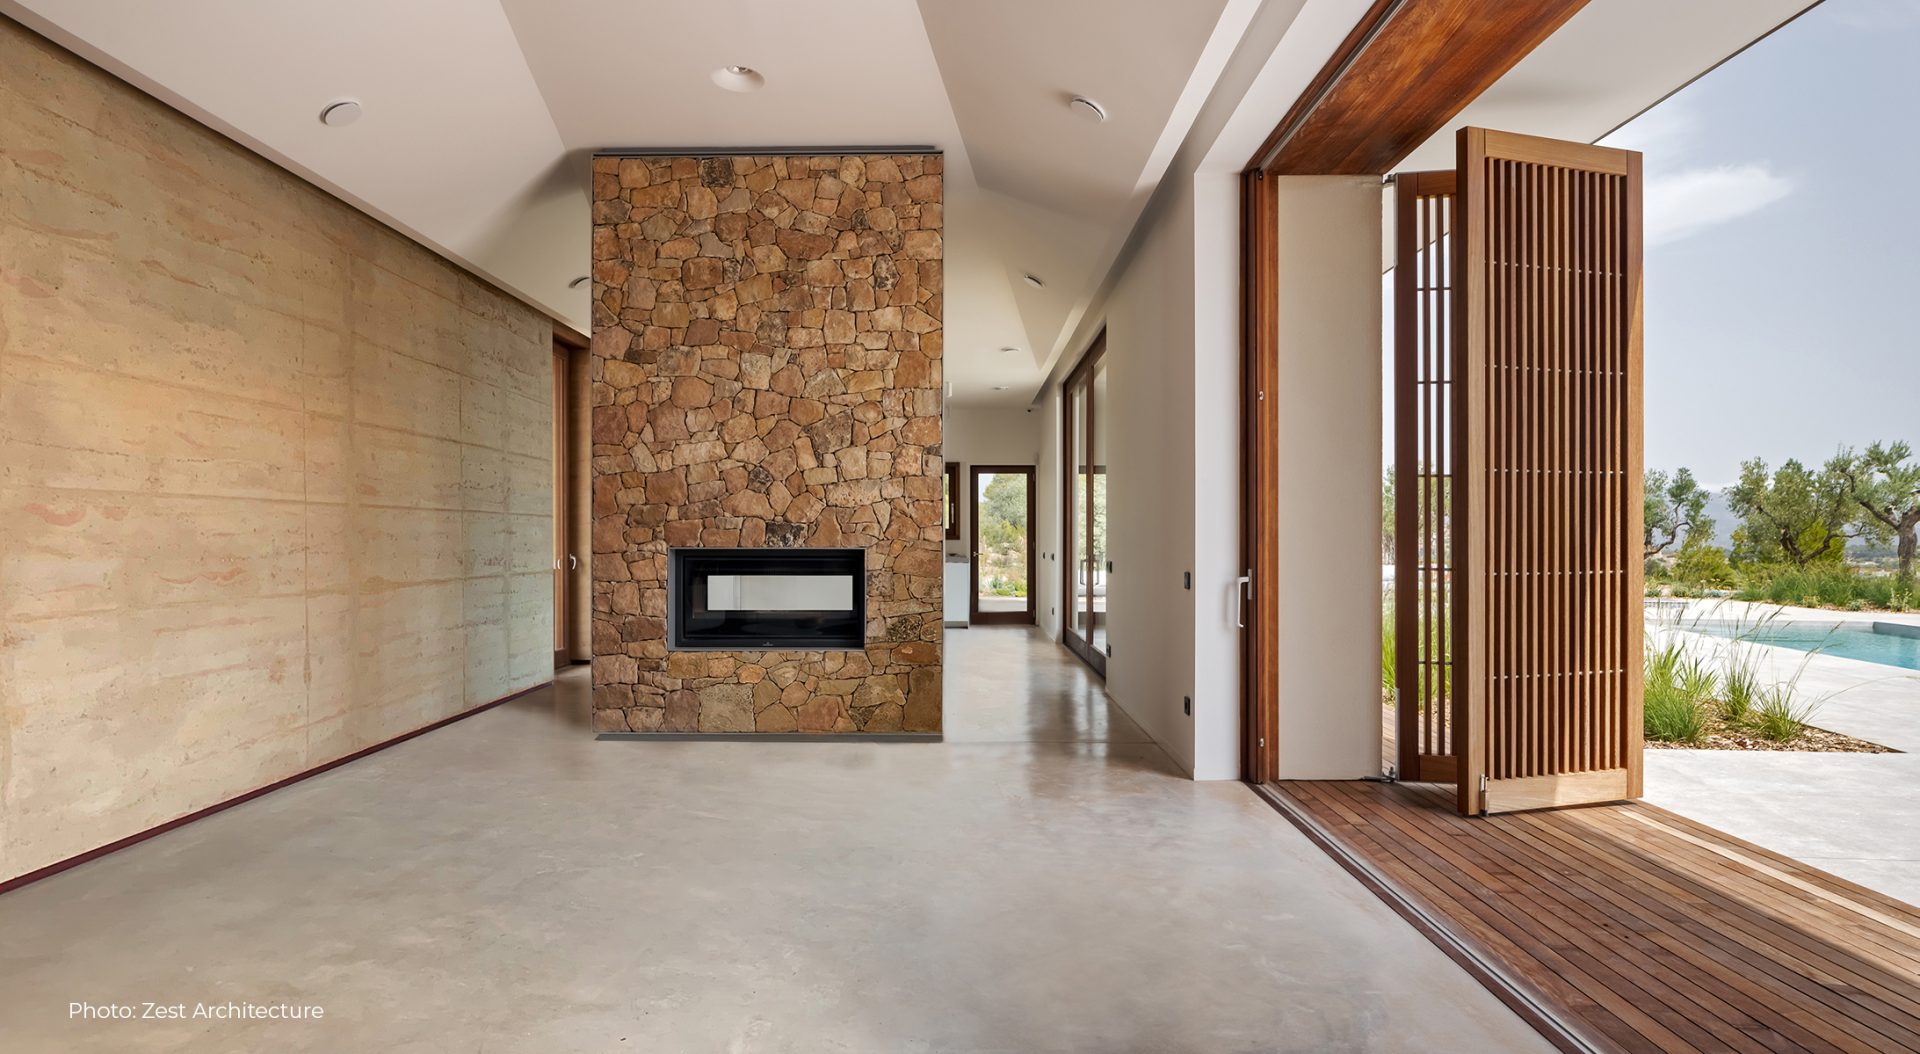 stone-fireplace-luxury-dwelling-slide-away-doors